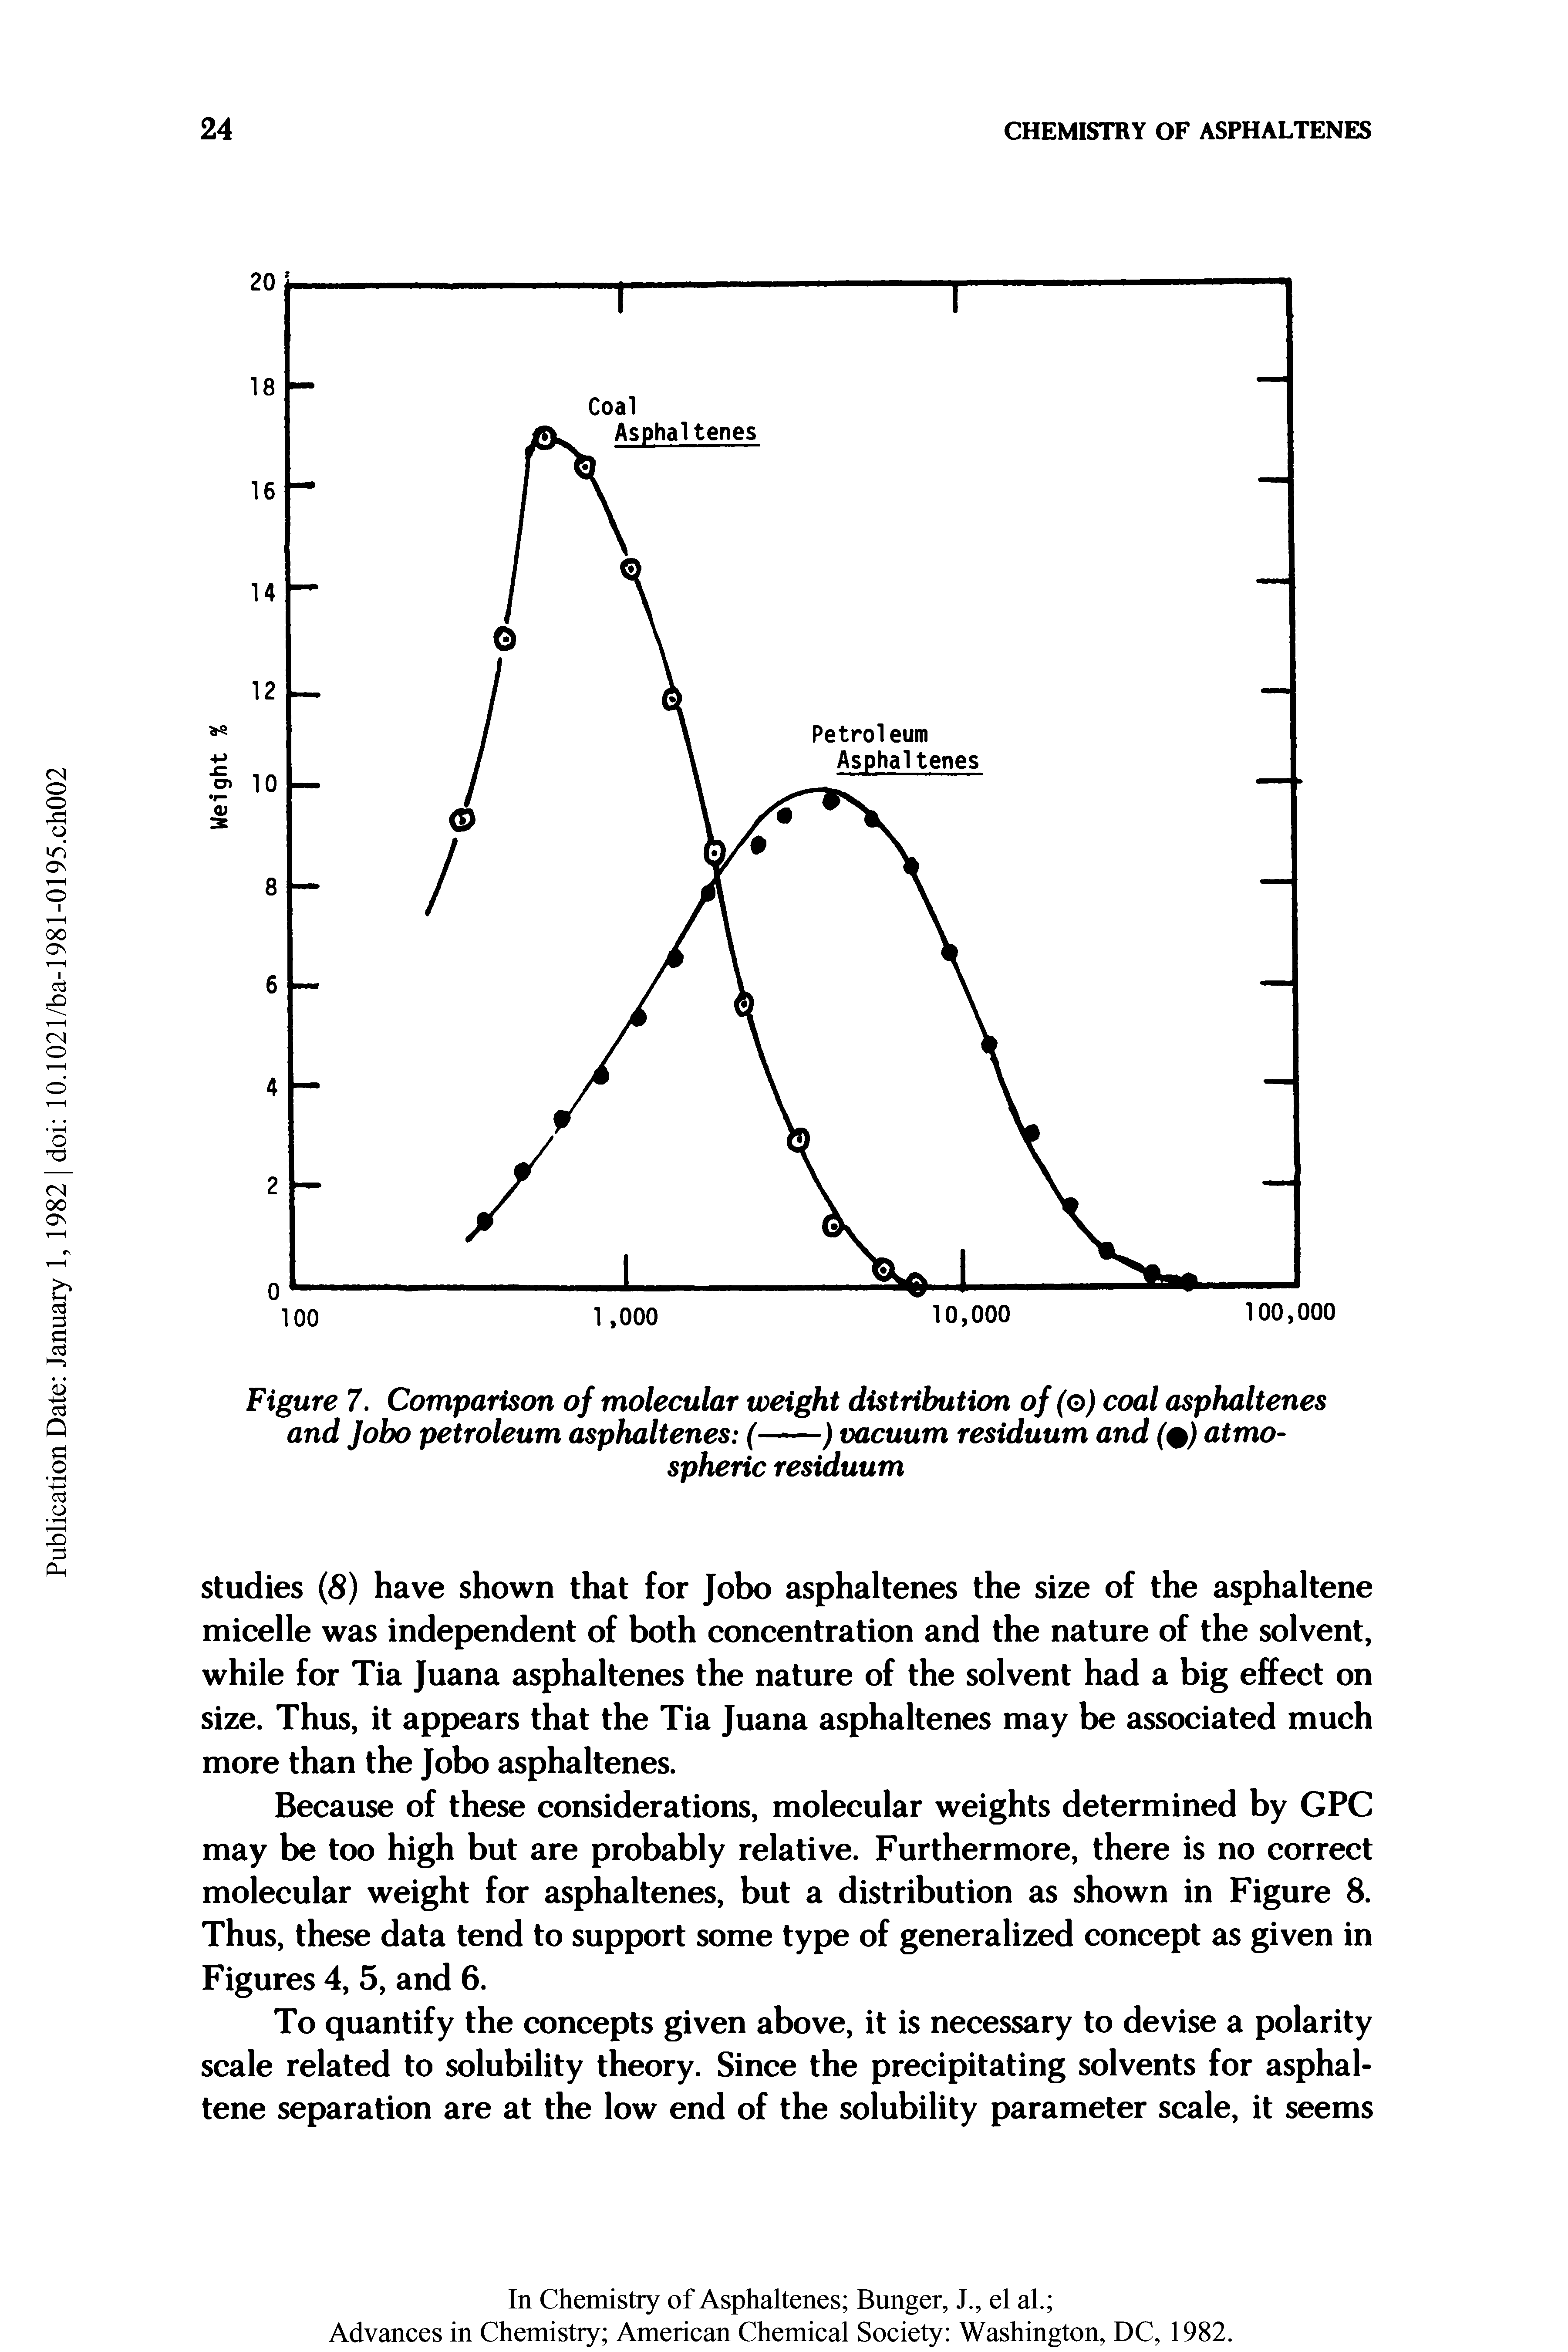 Figure 7. Comparison of molecular weight distribution off o) coal asphaltenes and Jobo petroleum asphaltenes (-------) vacuum residuum and (%) atmo-...